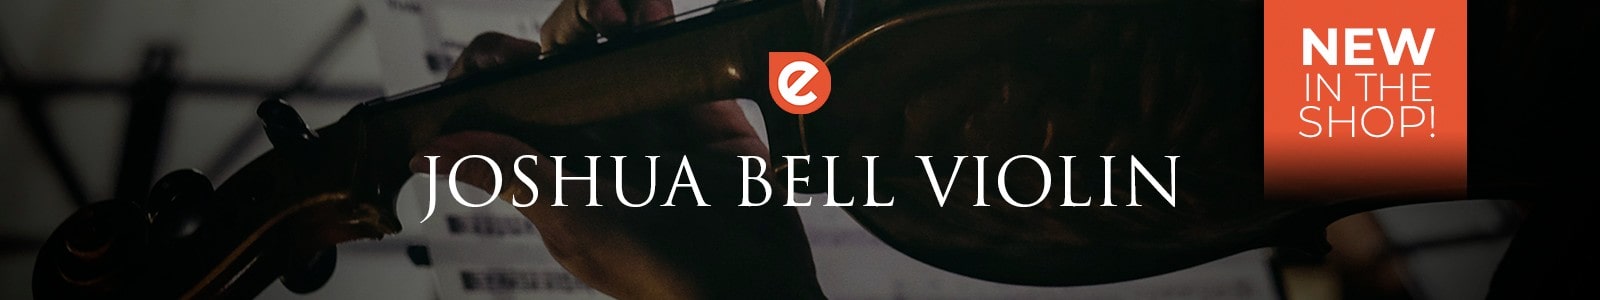 Joshua Bell Violin by Embertone